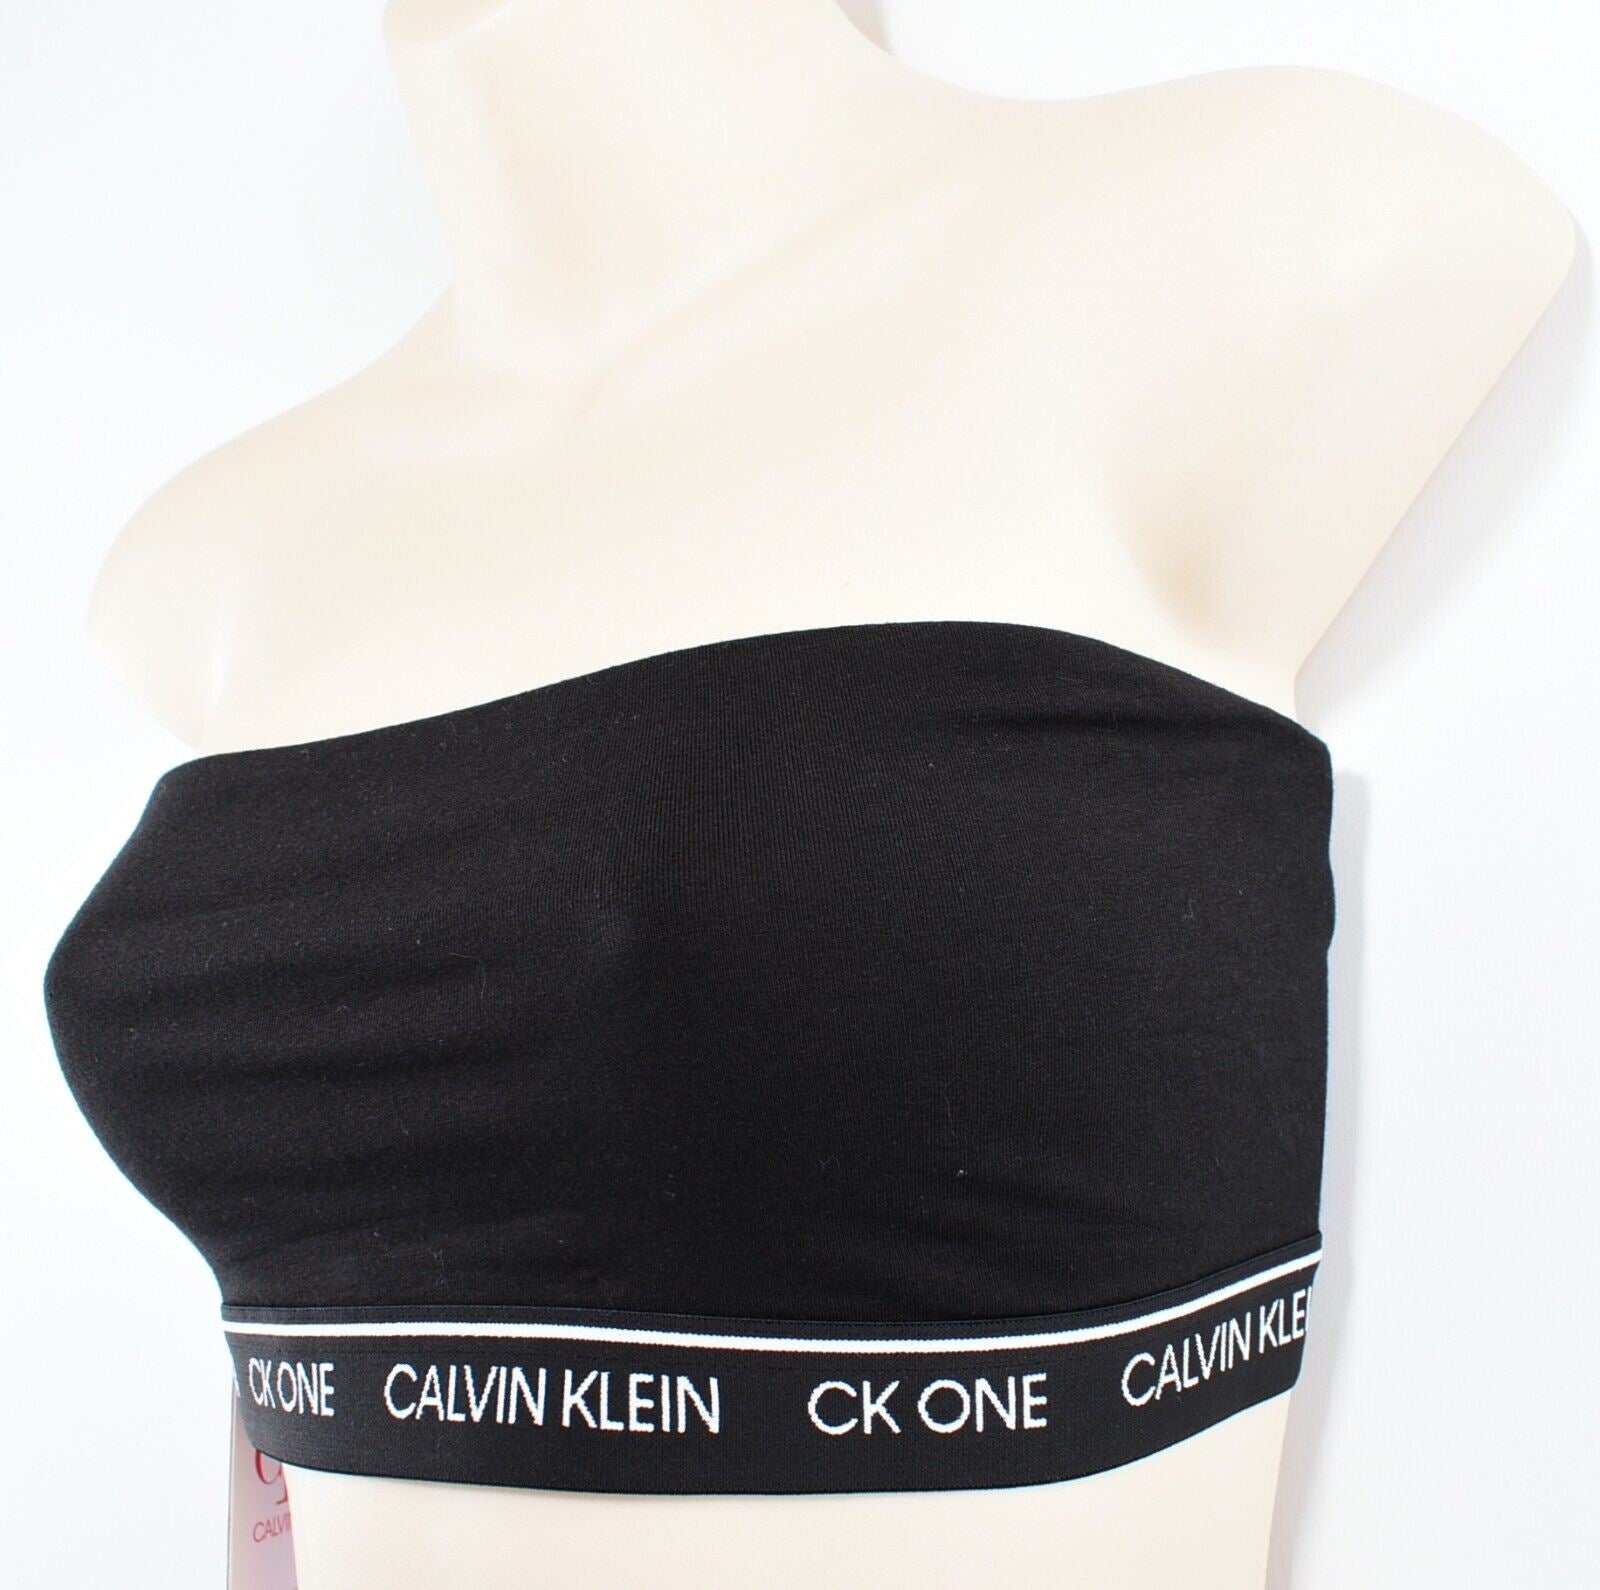 CALVIN KLEIN CK ONE Womens Cotton Bandeau Top, Black, size M /UK 12